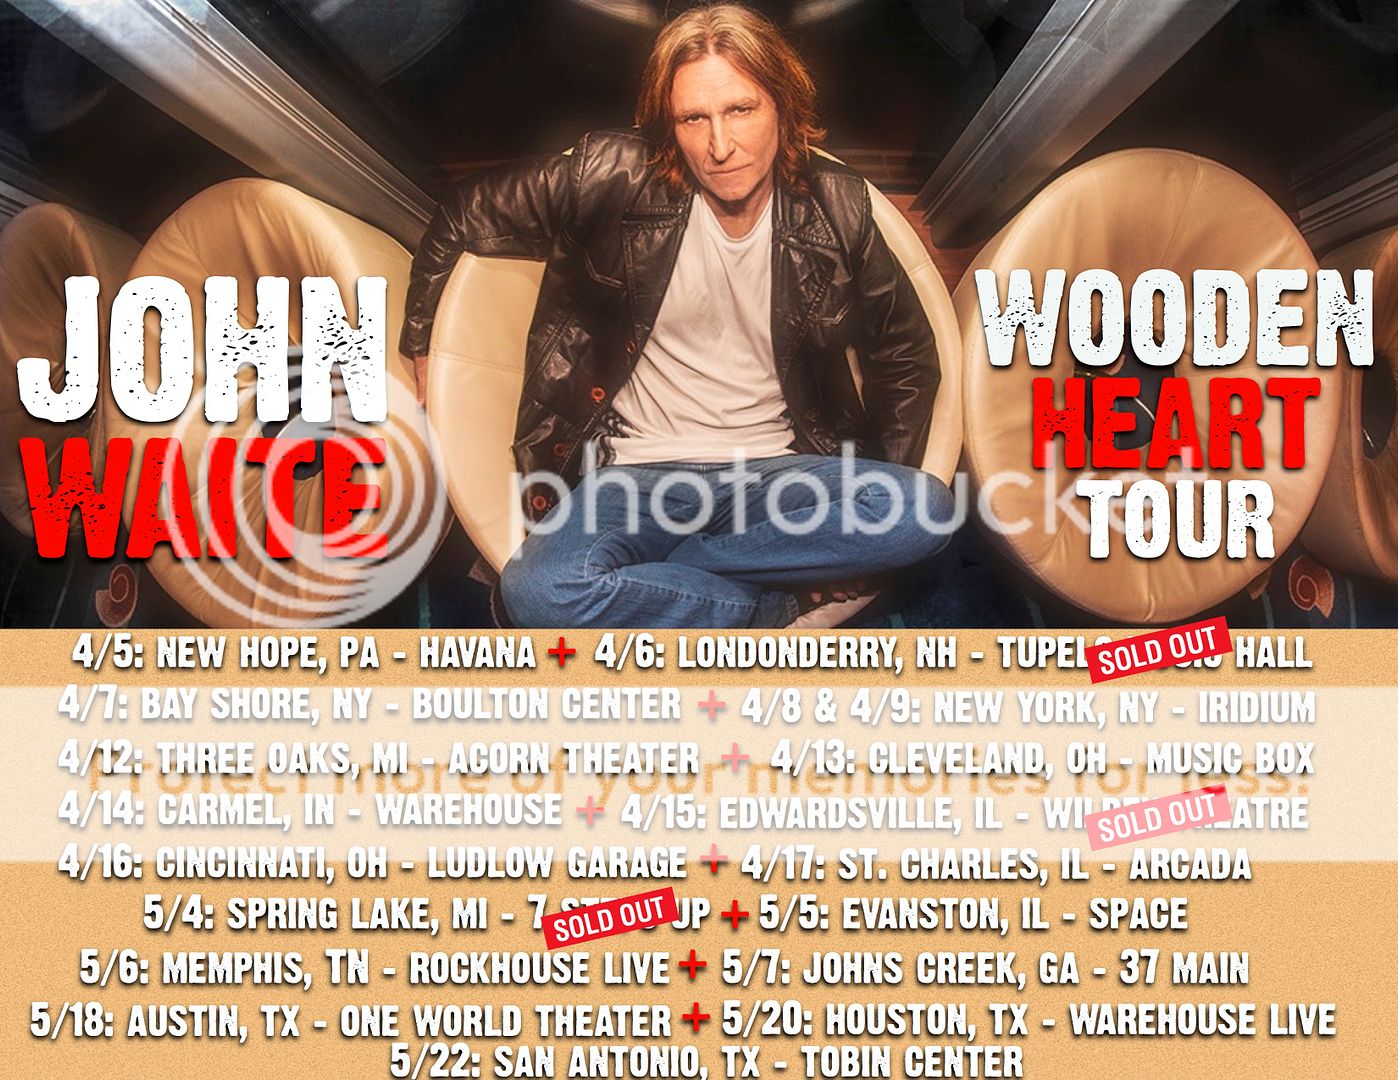 Wooden heart promo ad photo prome tour ad_zpspmm8tnie.jpg